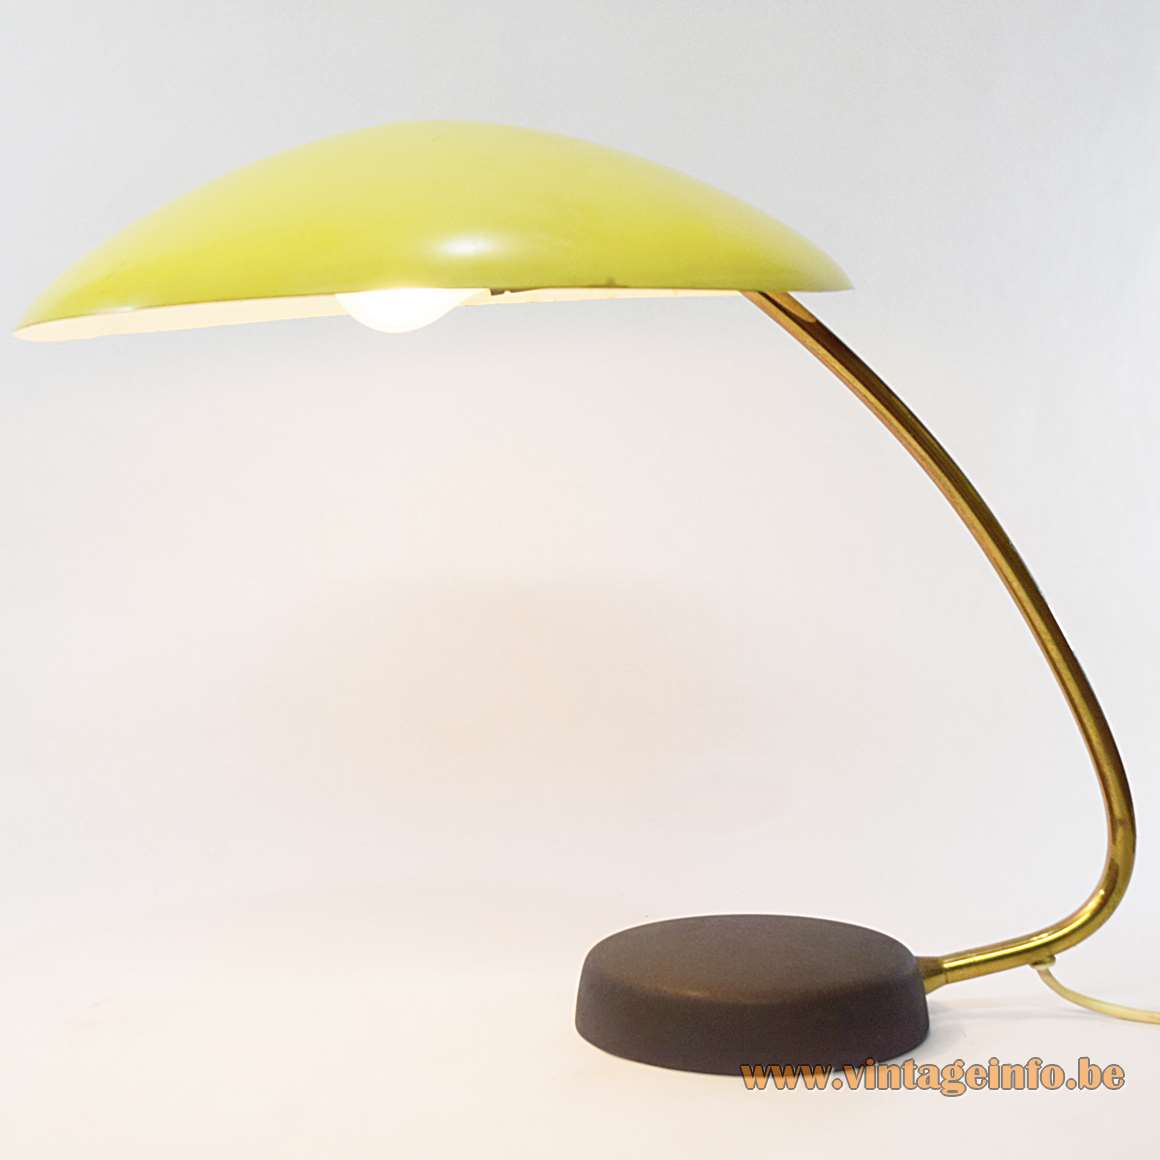 Gebrüder Cosack UFO desk lamp cast iron base brass rod yellow aluminium lampshade Germany 1950s 1960s